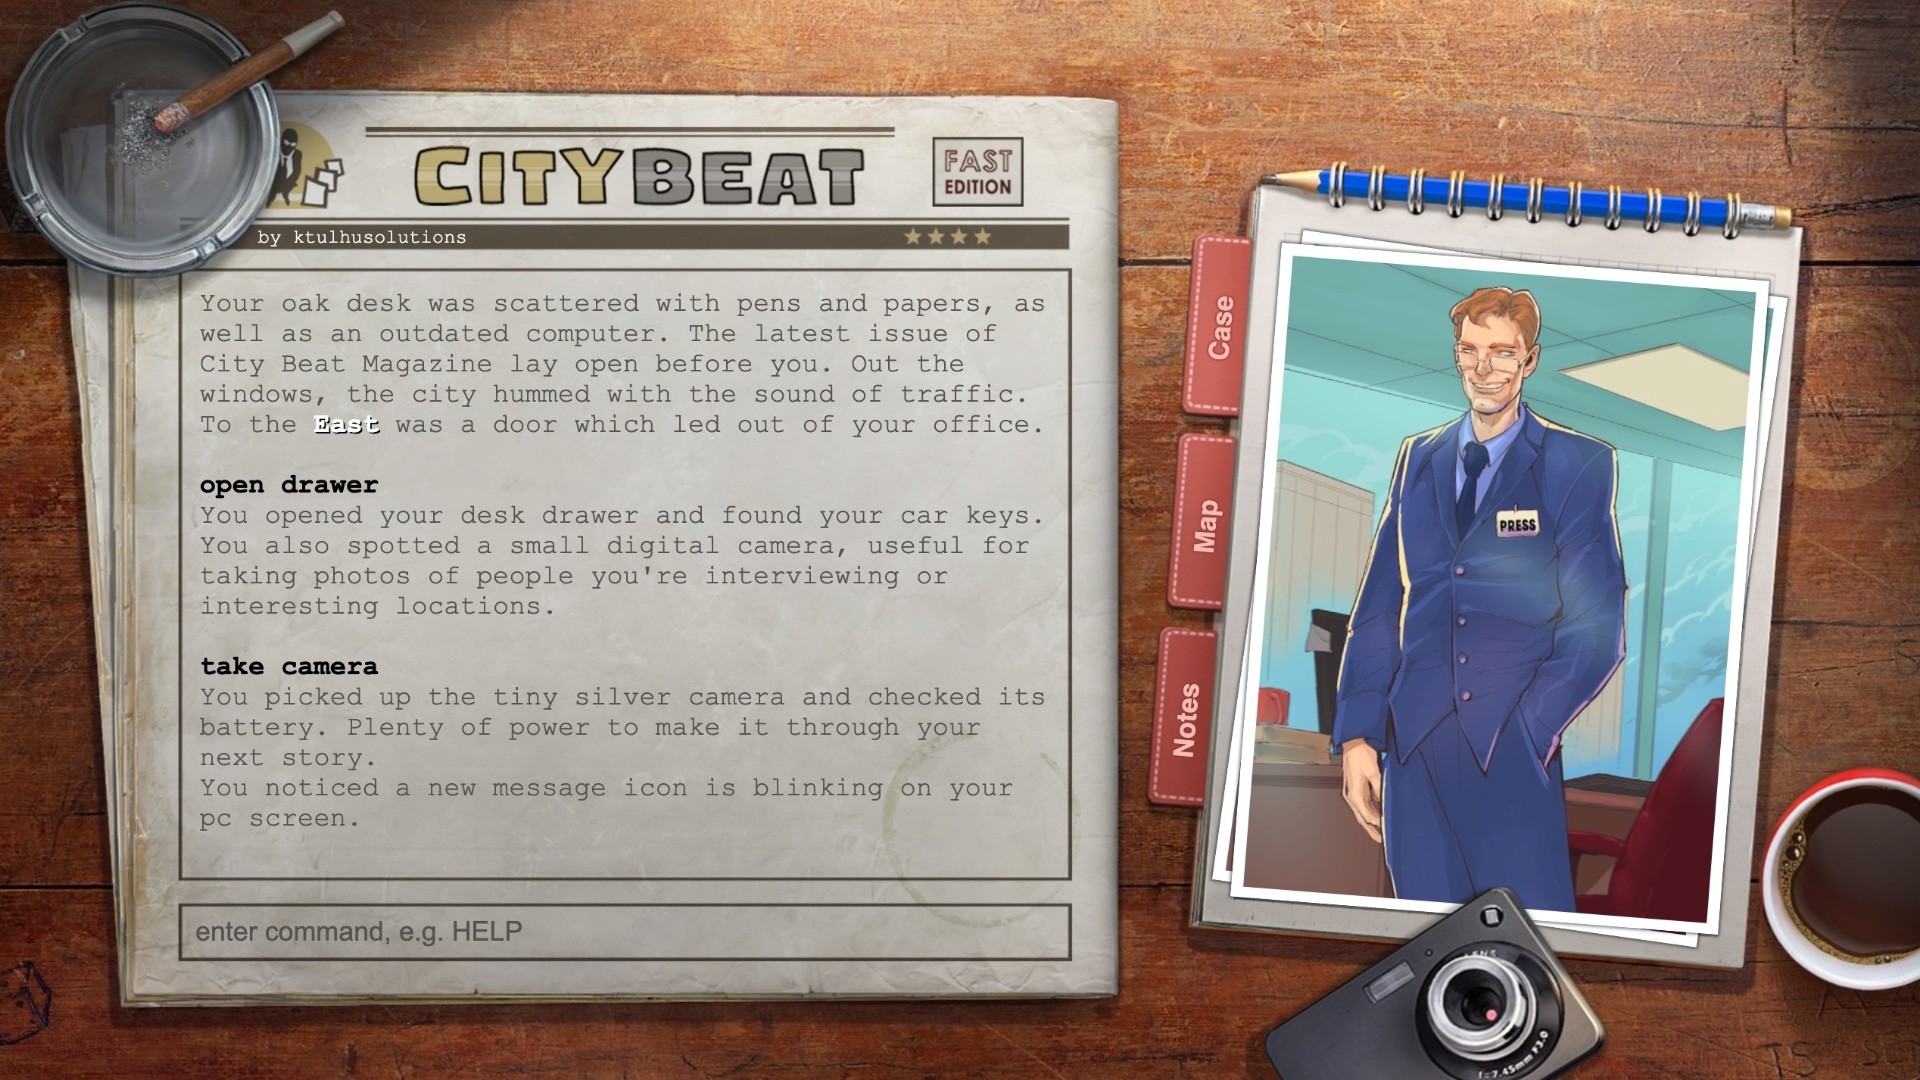 CityBeat: The Sorority Shuffle screenshot